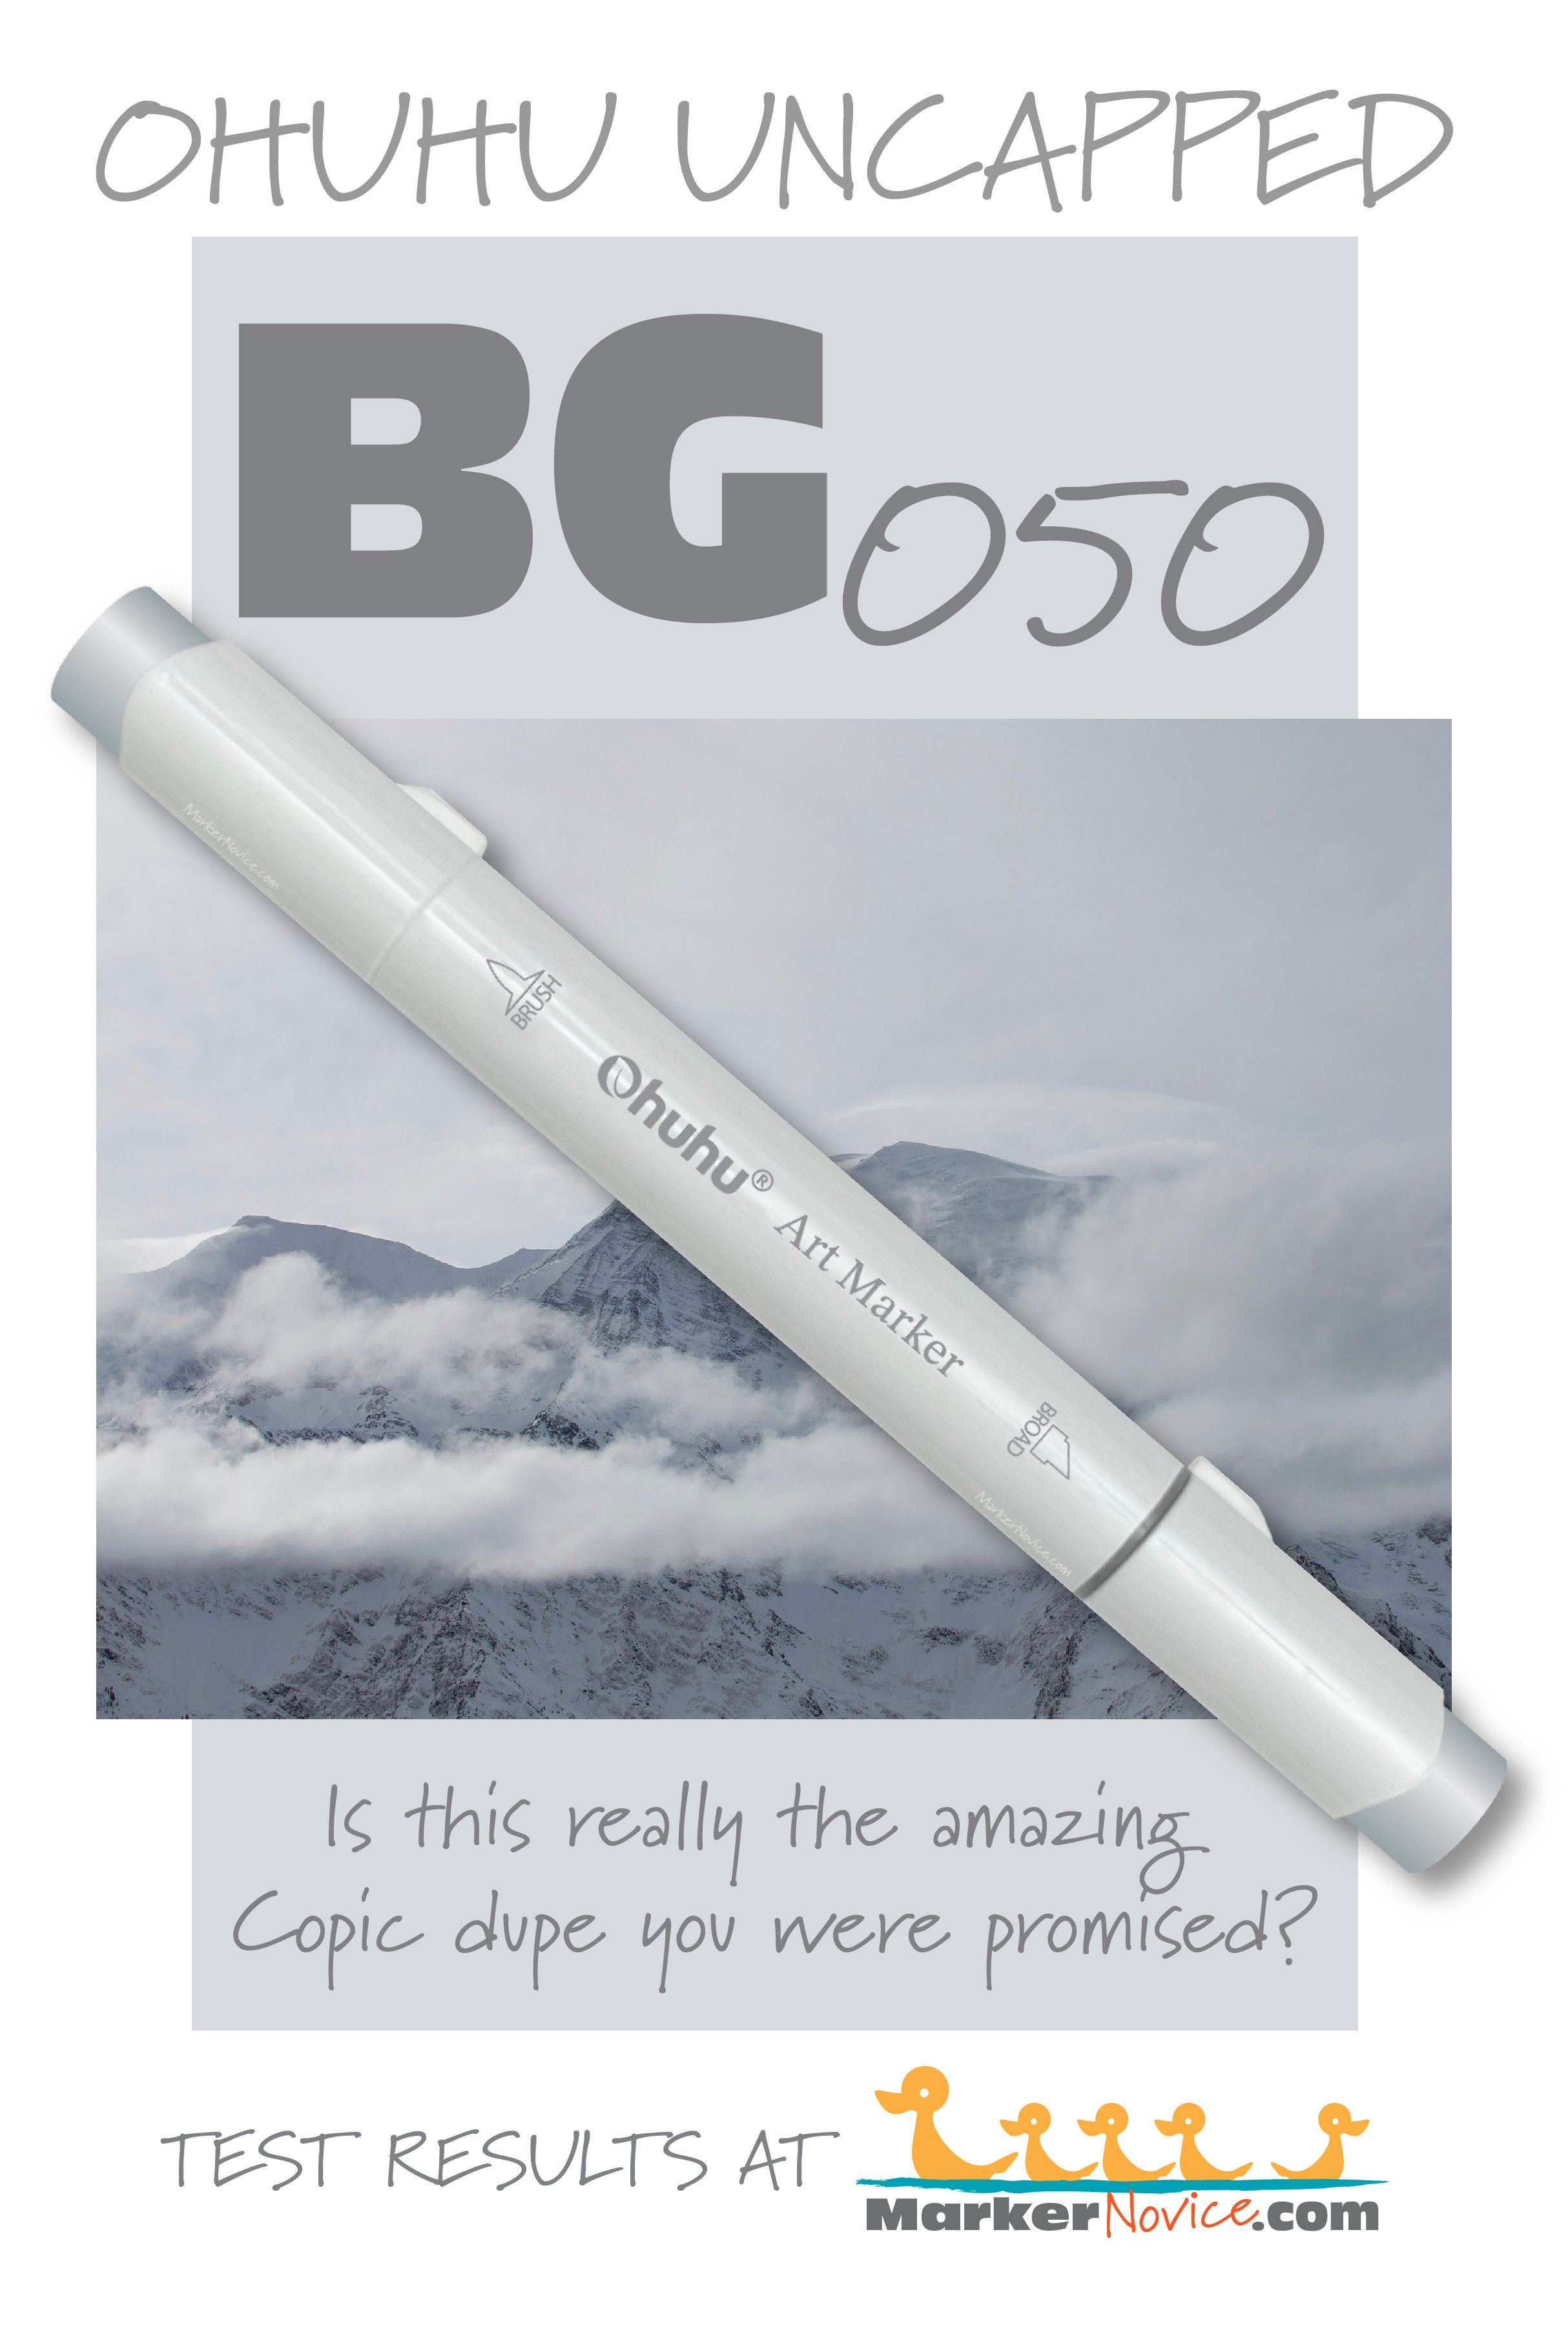 BG050 Cool Grey 05: Testing Ohuhu Markers for Lightfastness and Quality —  Marker Novice